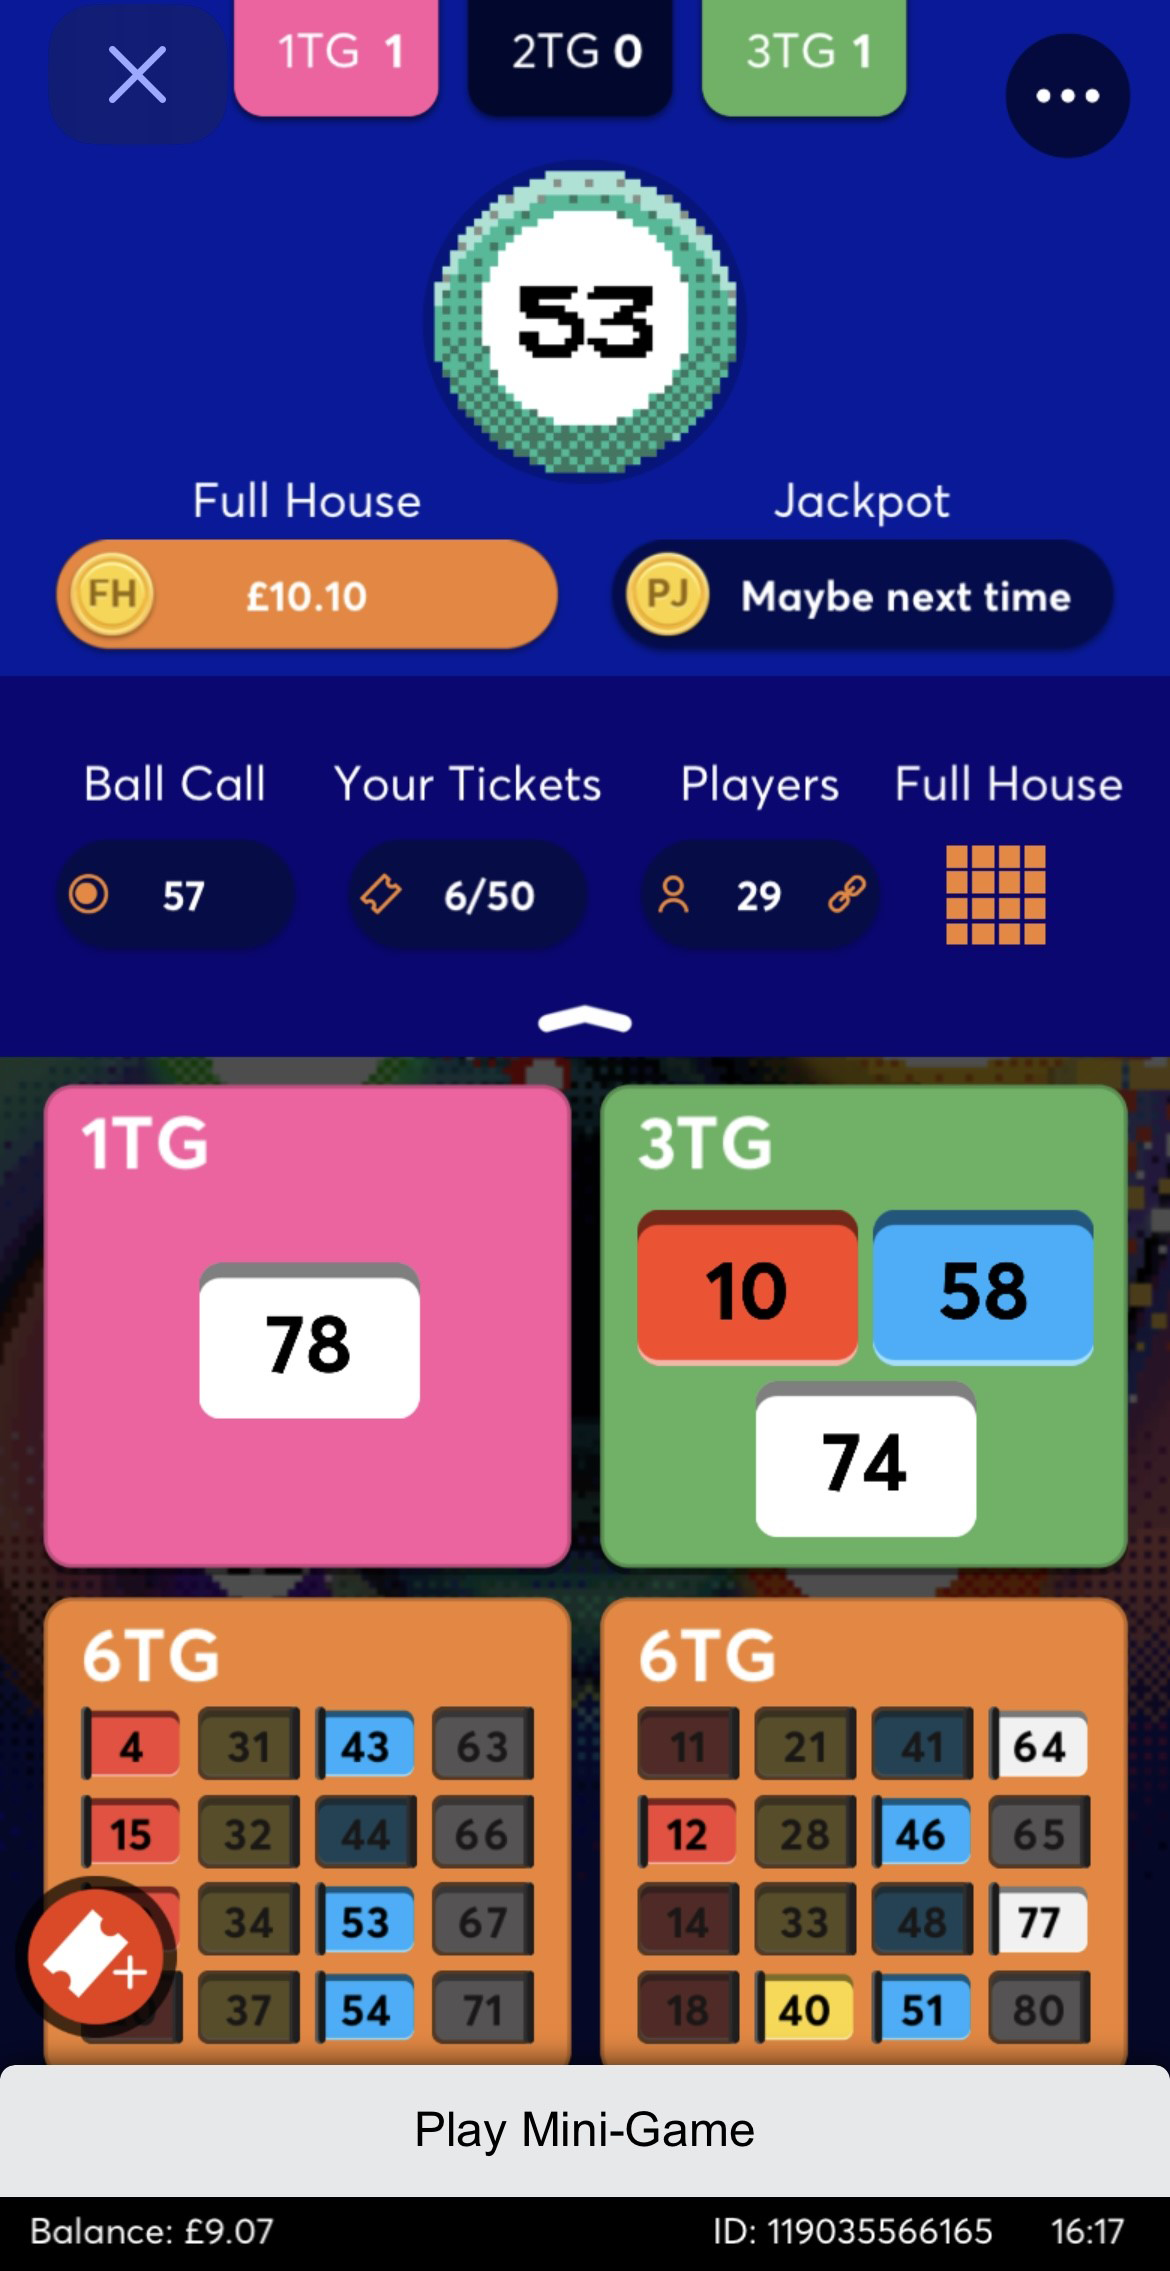 Jackpotjoy Bingo | Get 30 Spins or £50 FREE Bingo Here